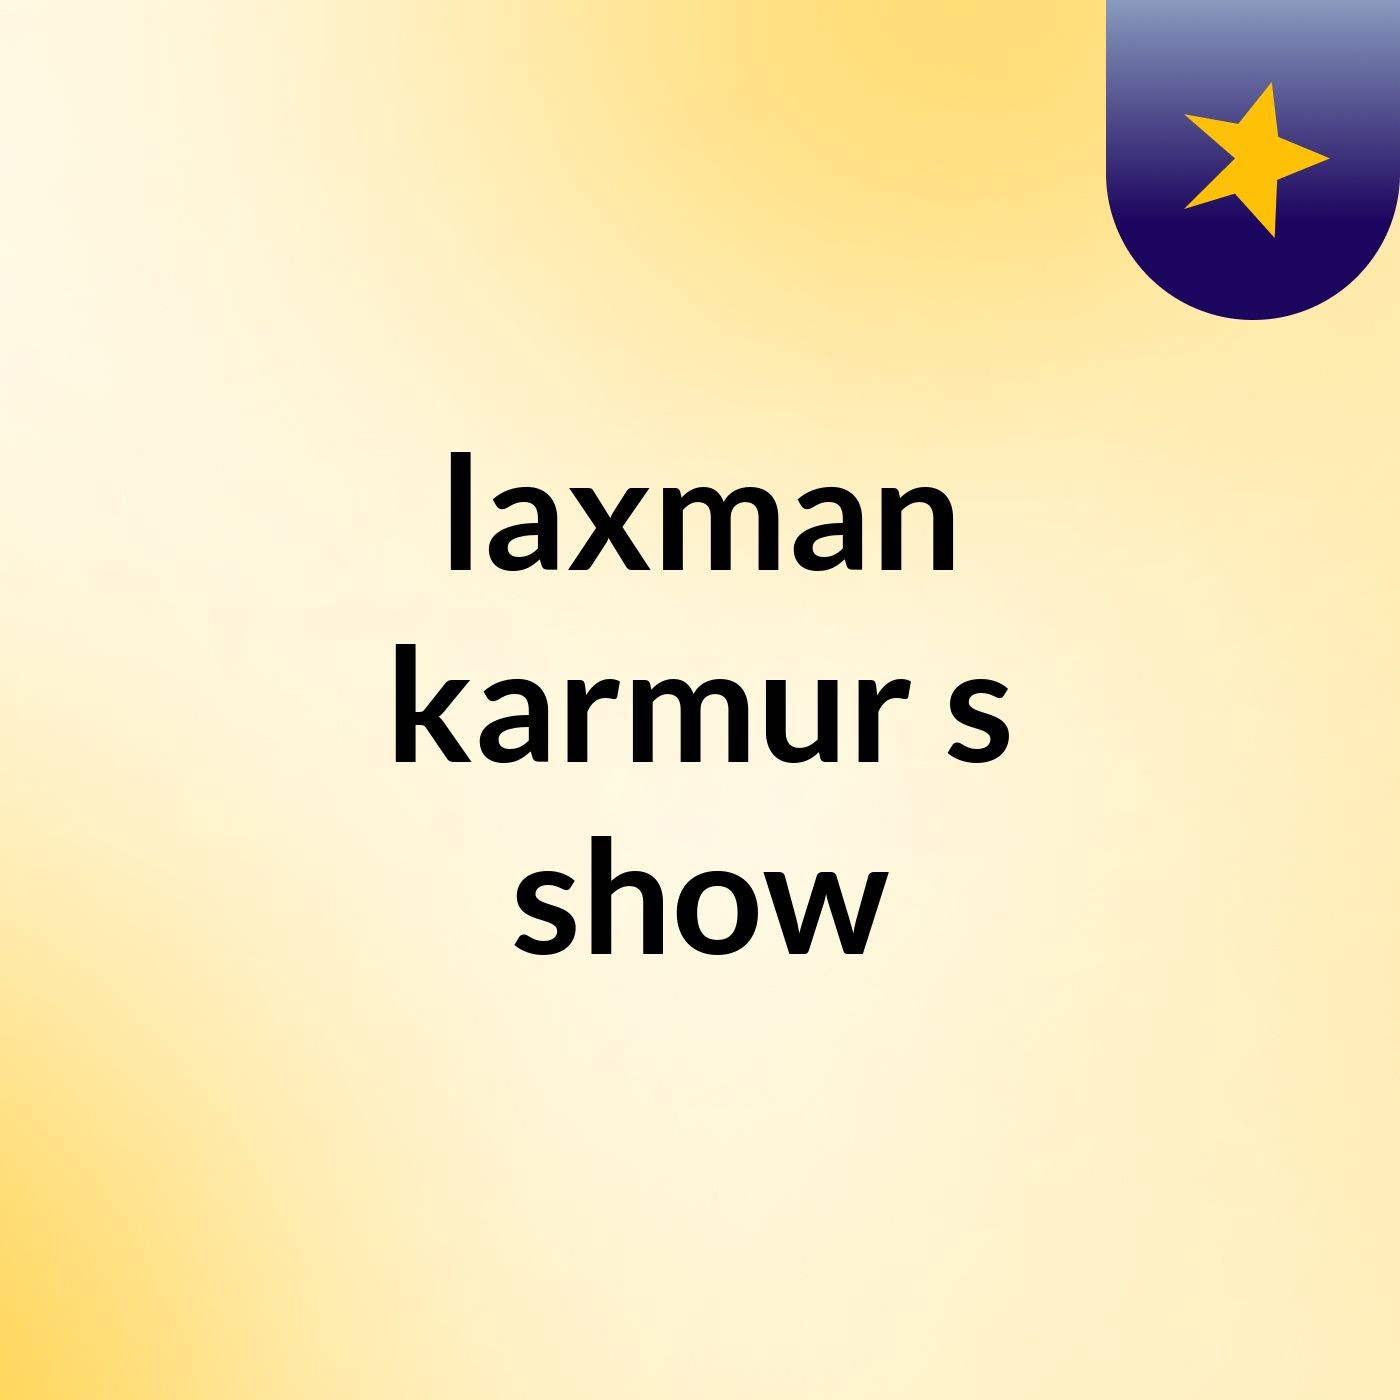 Episode 2 - laxman karmur's show